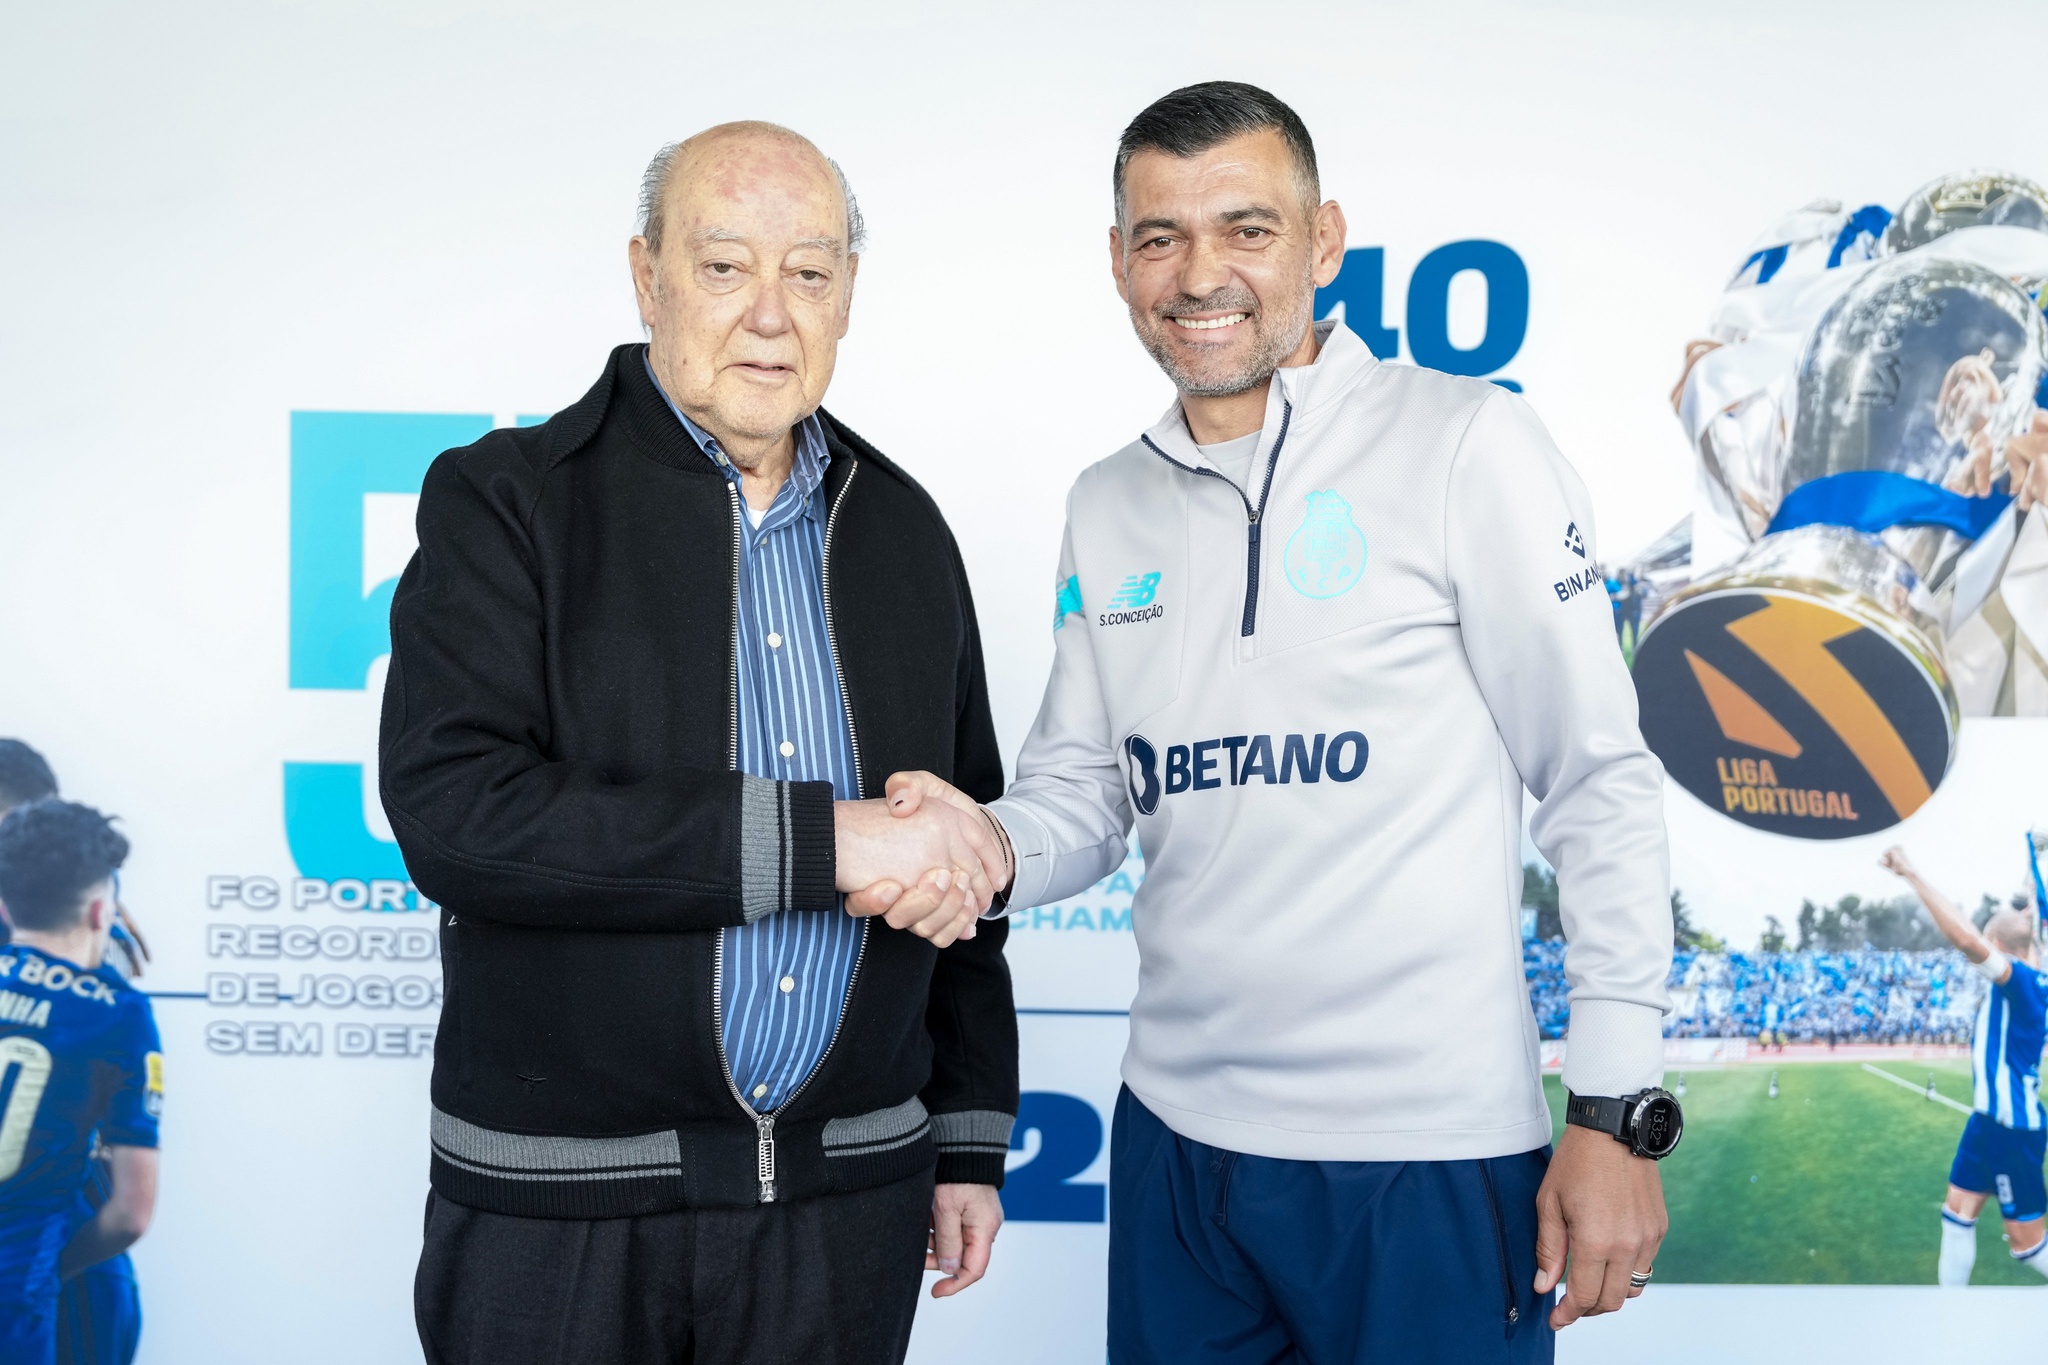 Sérgio Conceição reconduit avec le FC Porto jusqu’en 2028 : « Je ne suis pas attaché au lieu » |  Football national